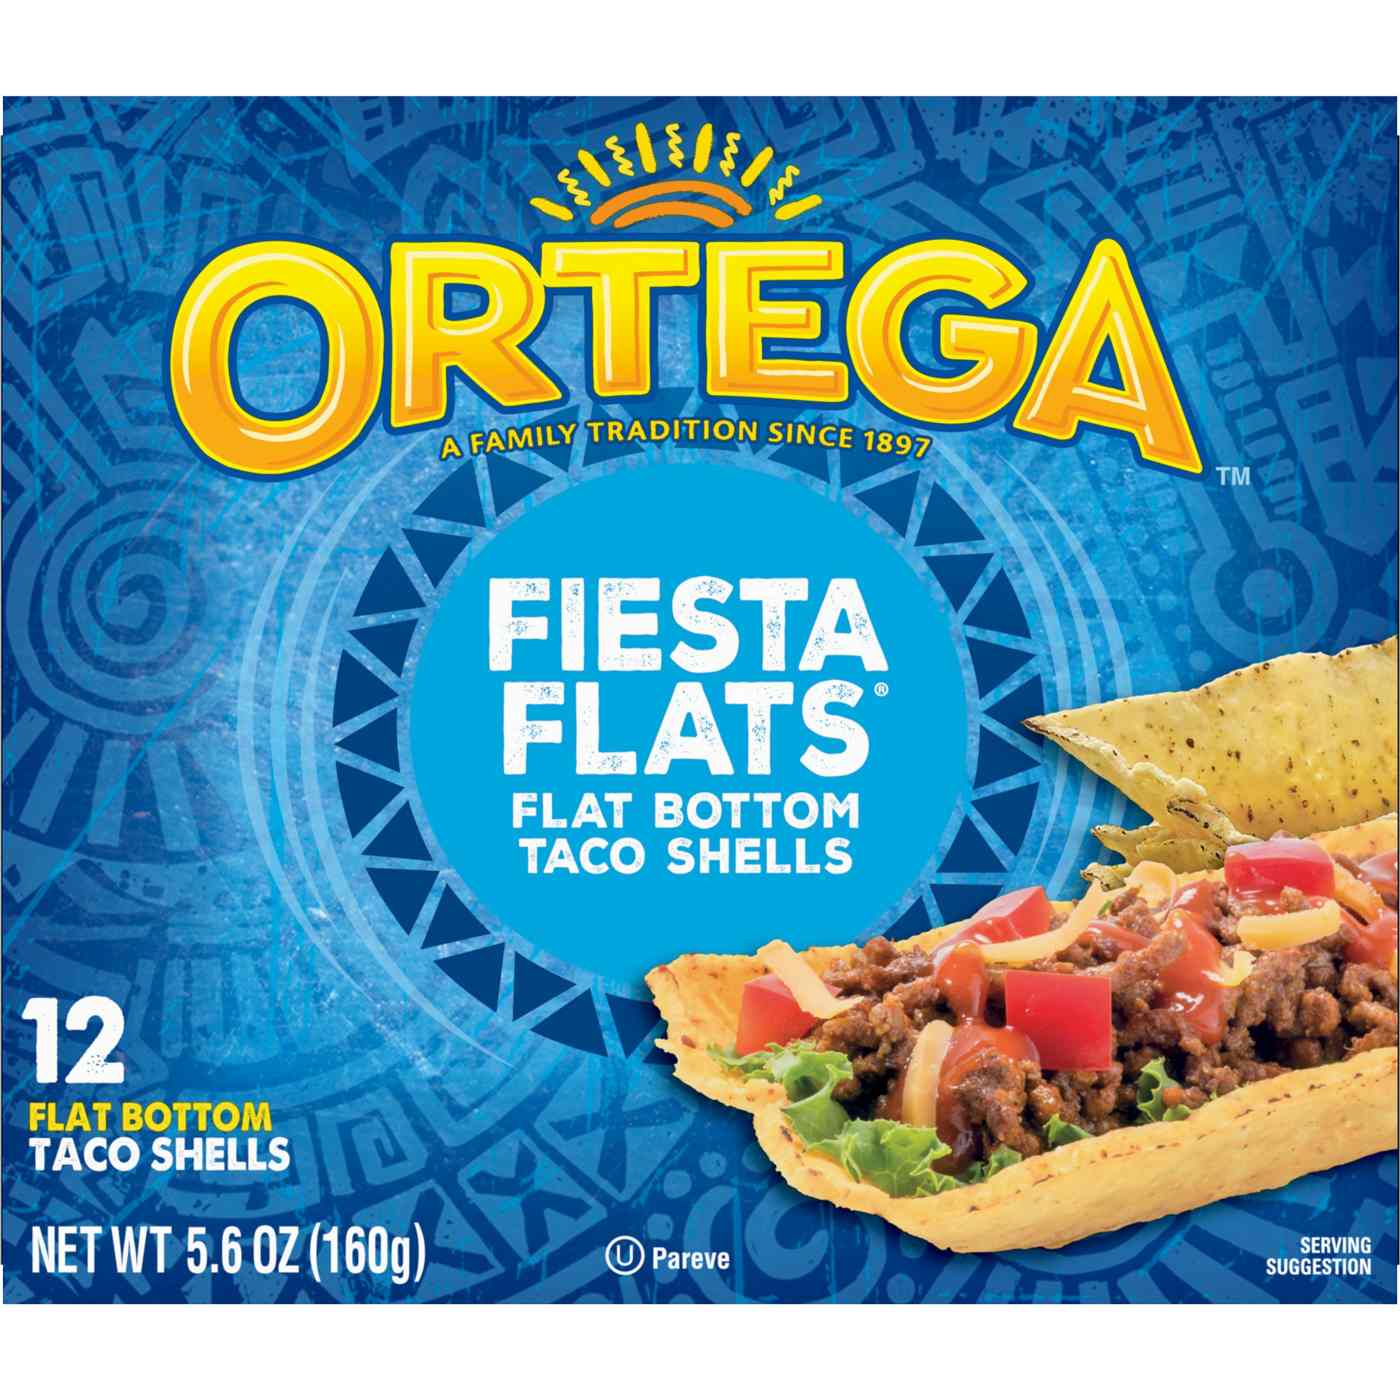 Ortega Fiesta Flats Flat Bottom Taco Shells; image 2 of 3